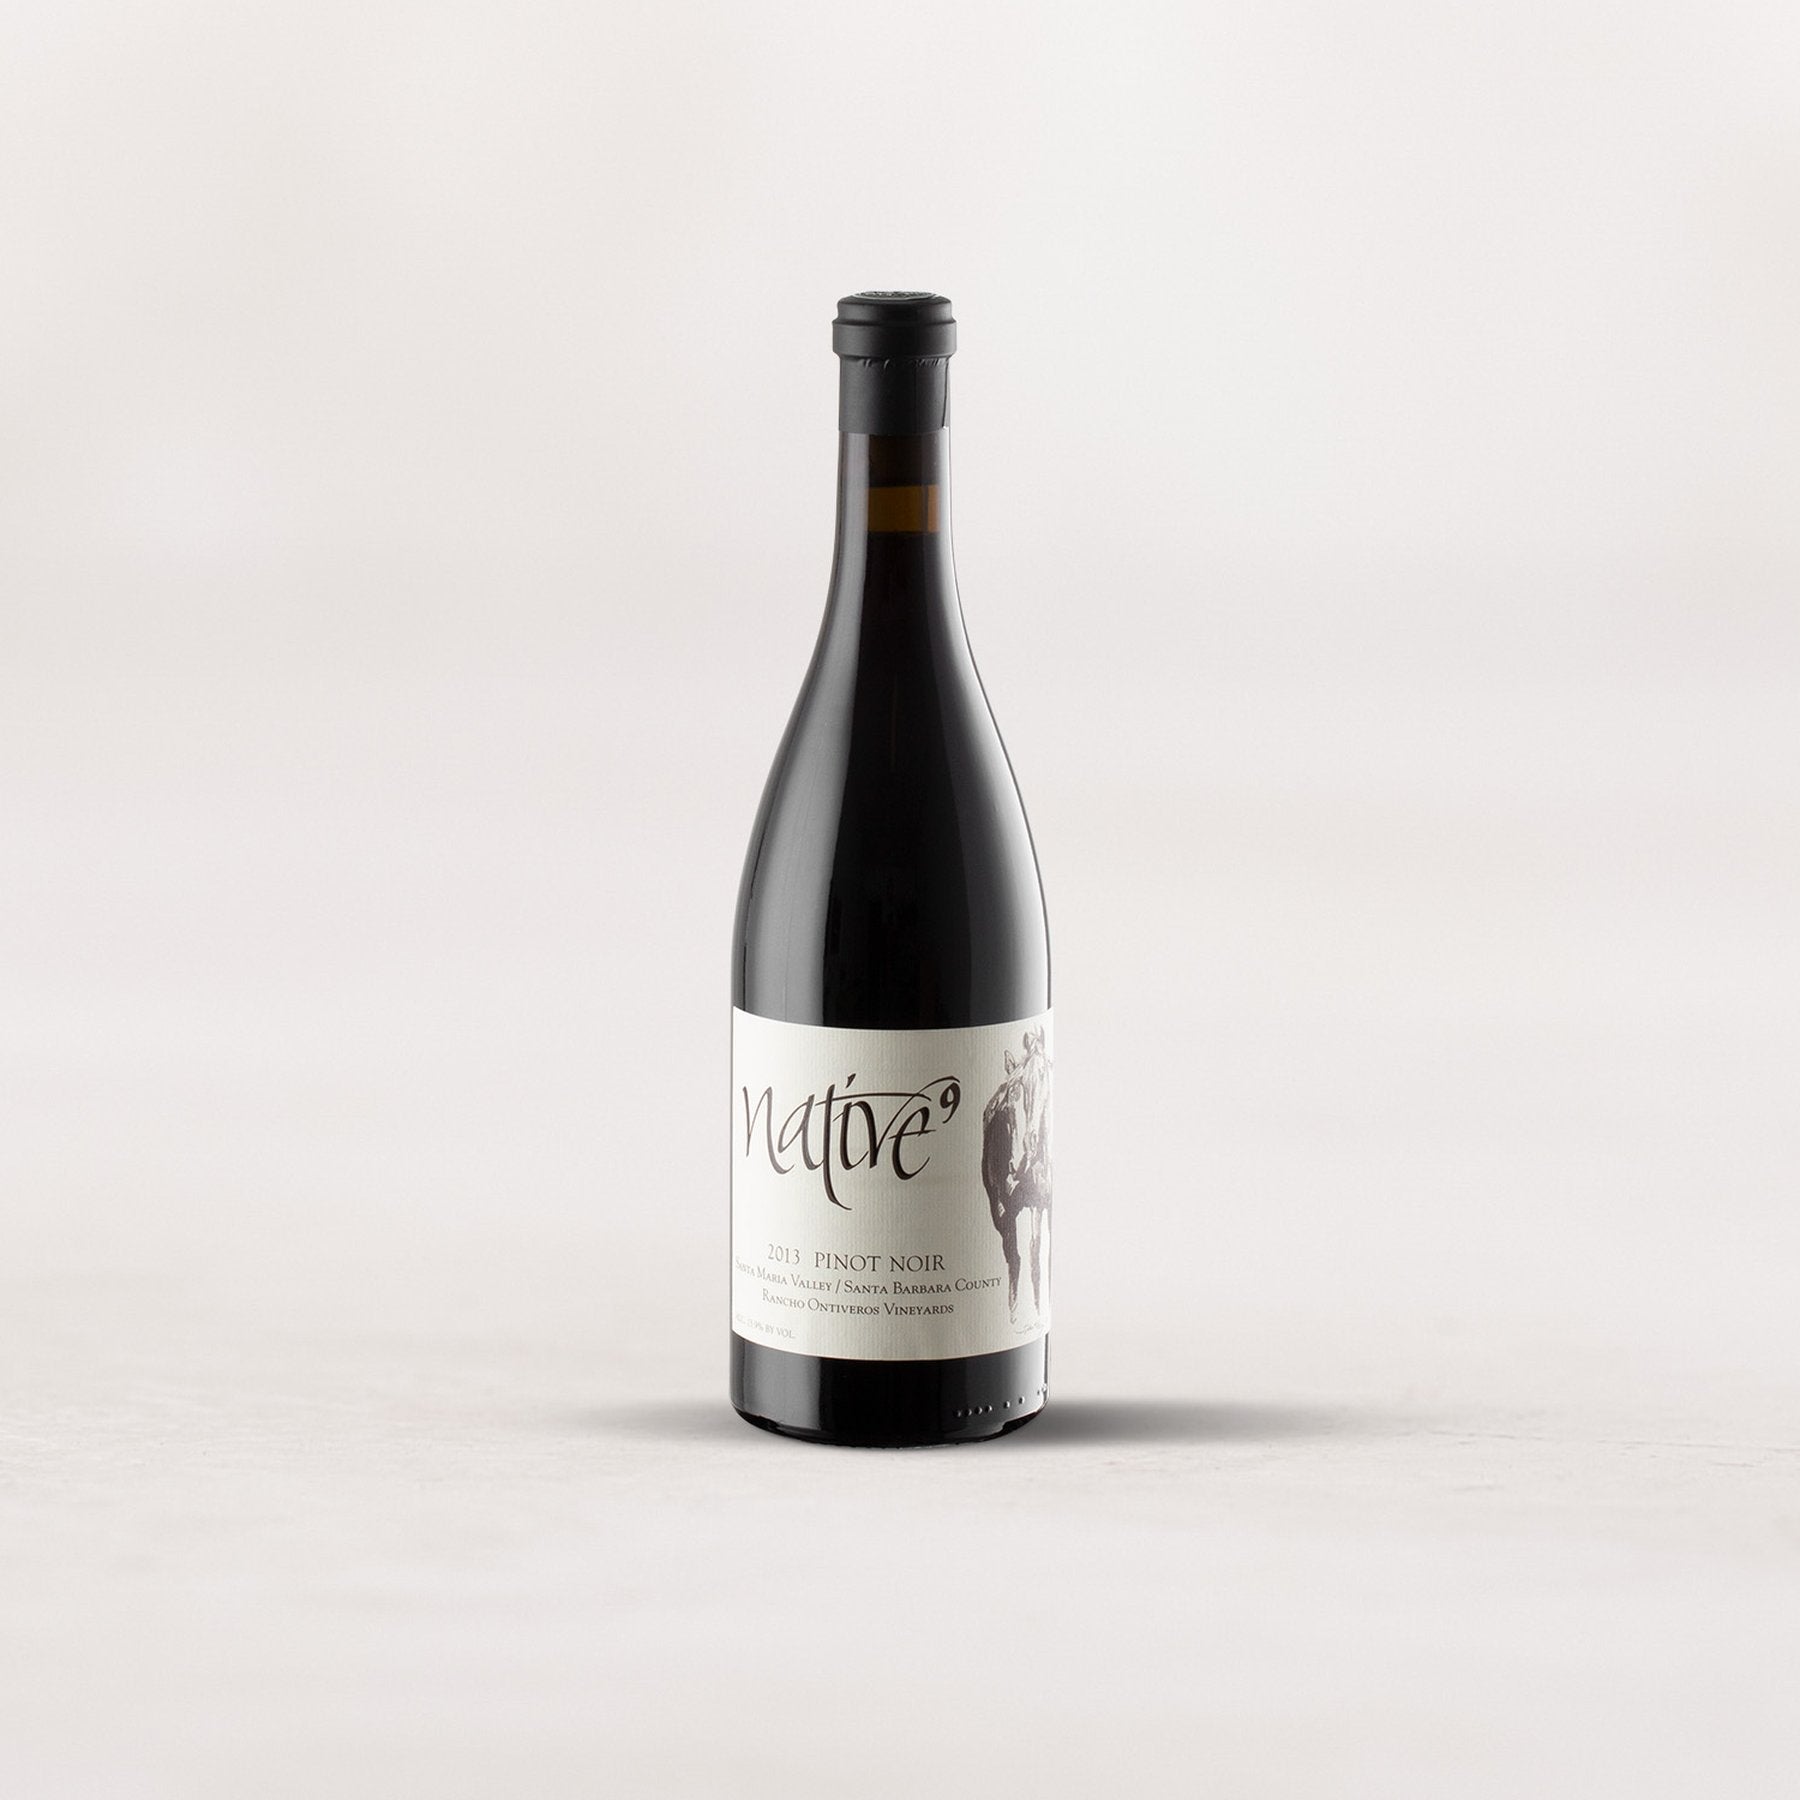 Rancho Ontiveros Vineyards, “Native 9” Pinot Noir